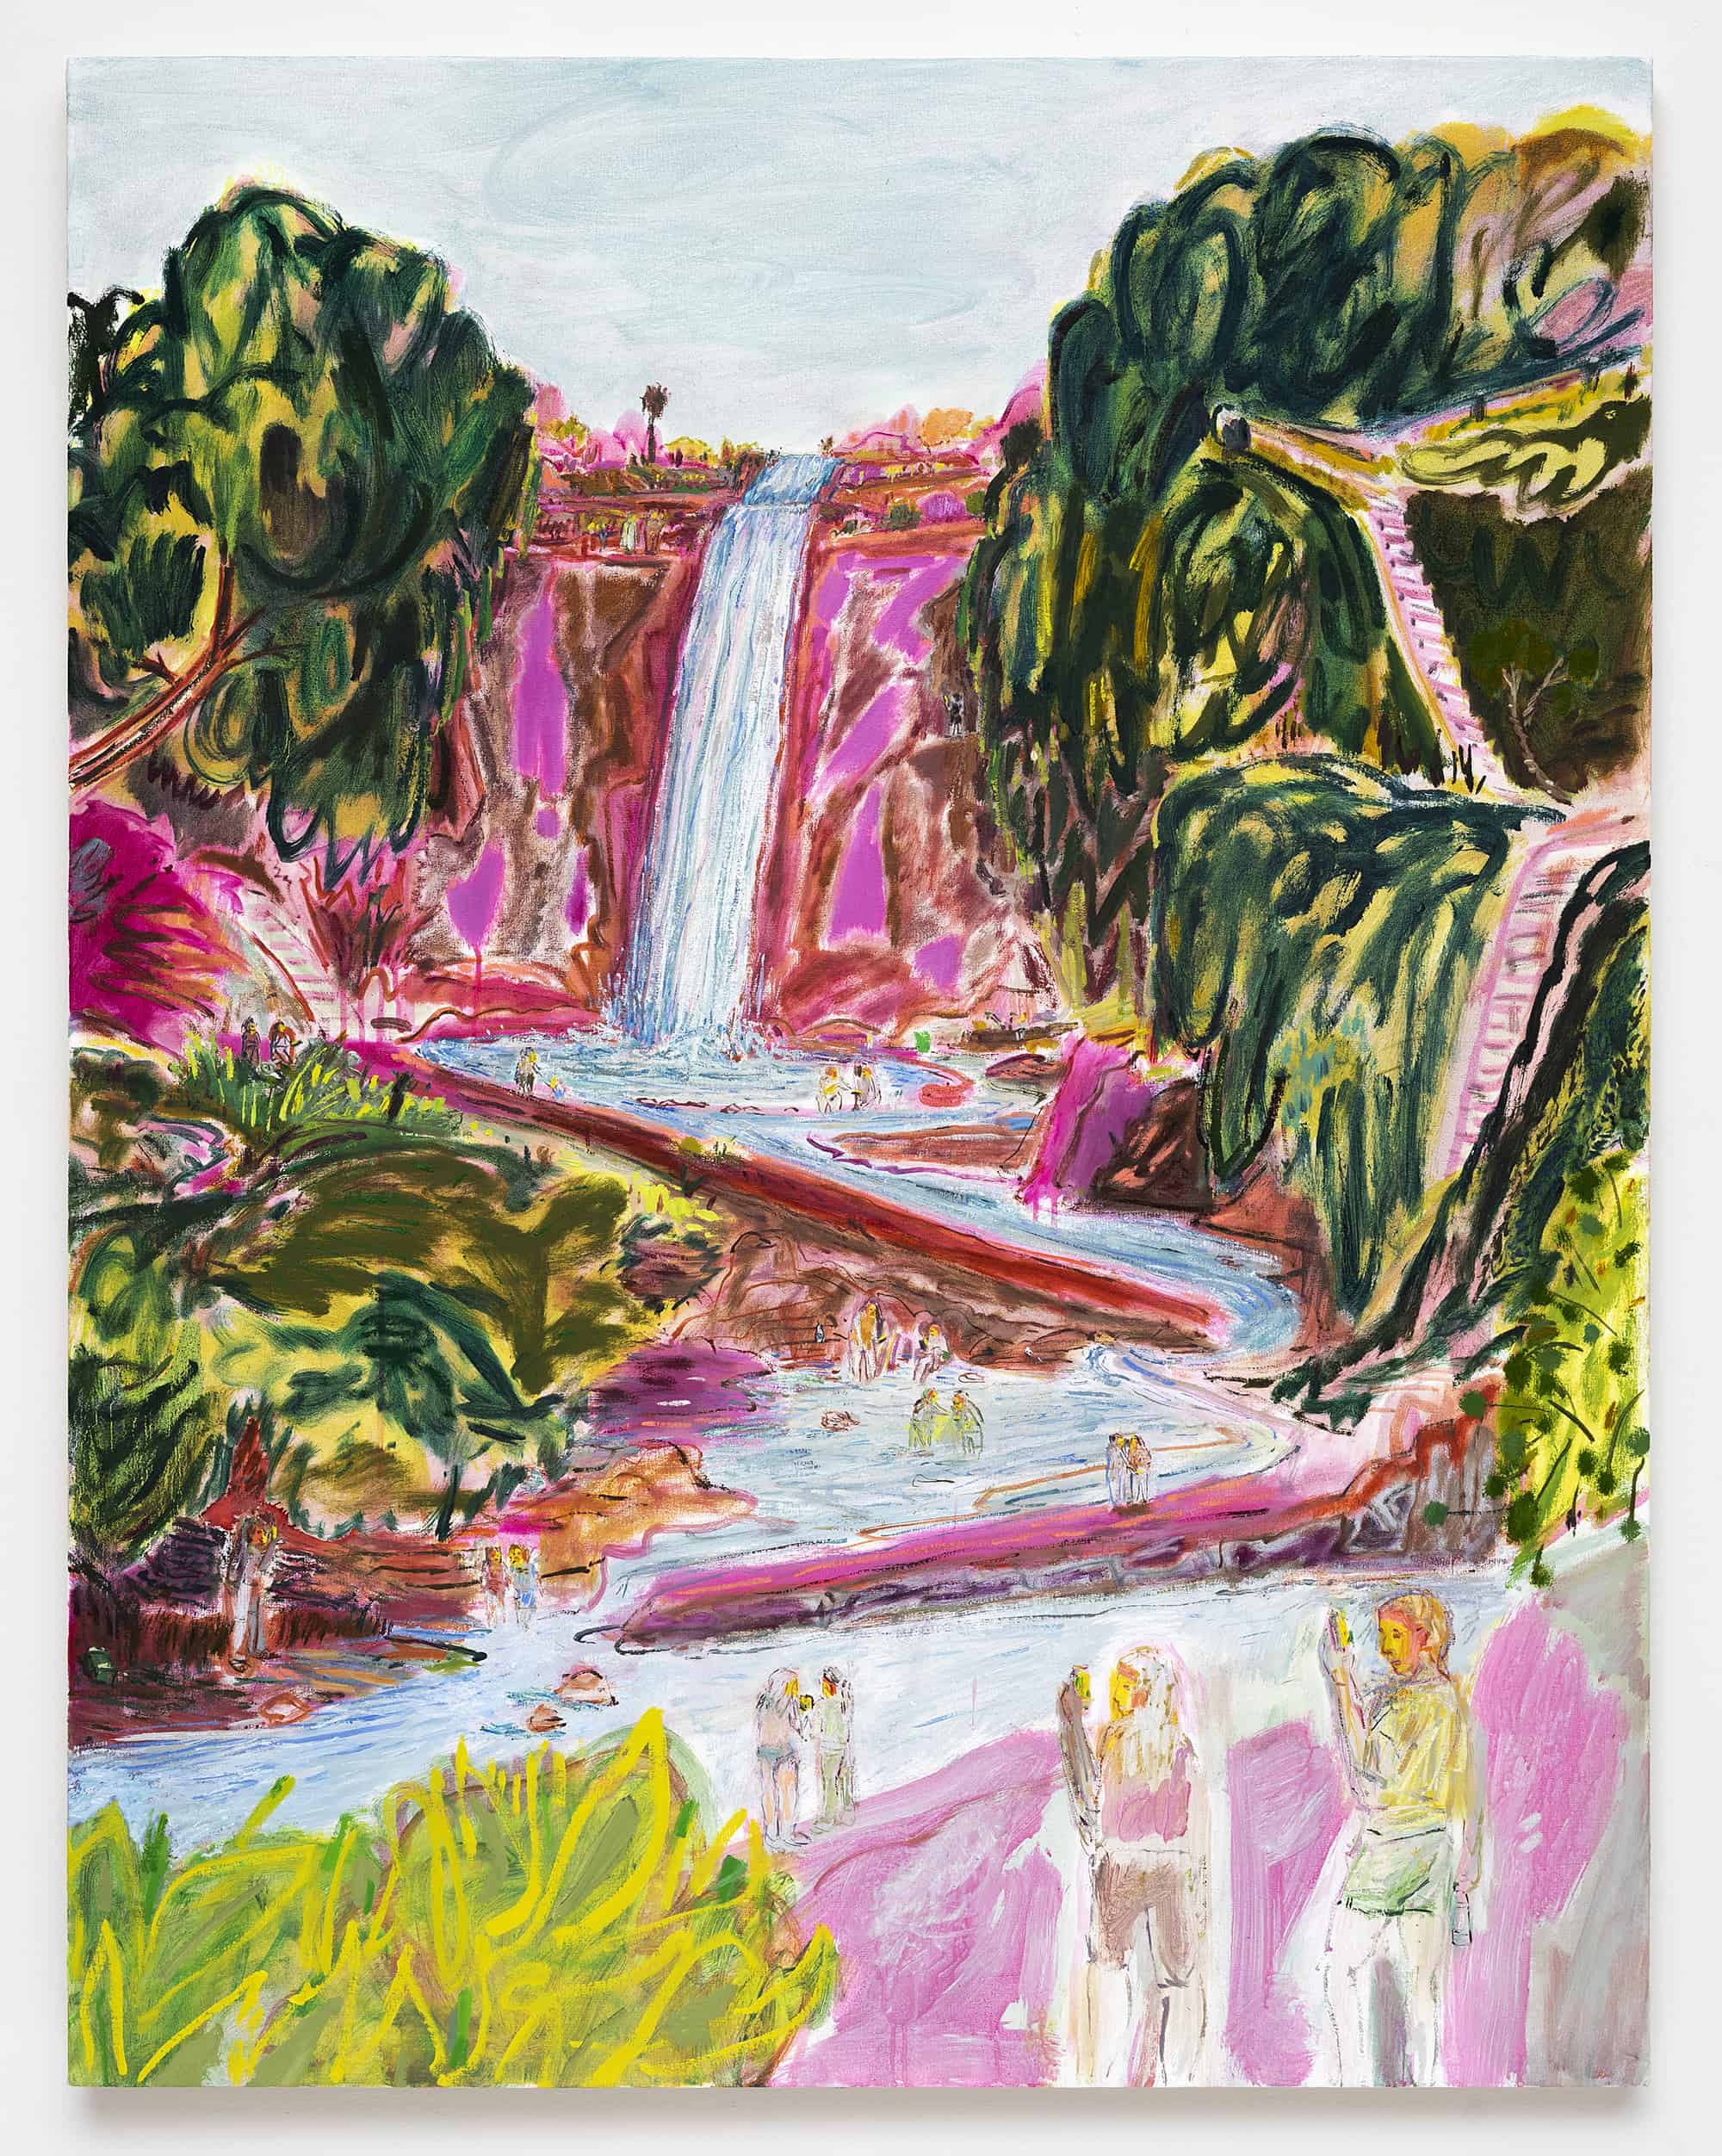 Kaaterskill Falls, Lisa Sanditz, Evergreen. Huxley-Parlour Gallery, 3-5 Swallow Street, London, W1B 4DE.